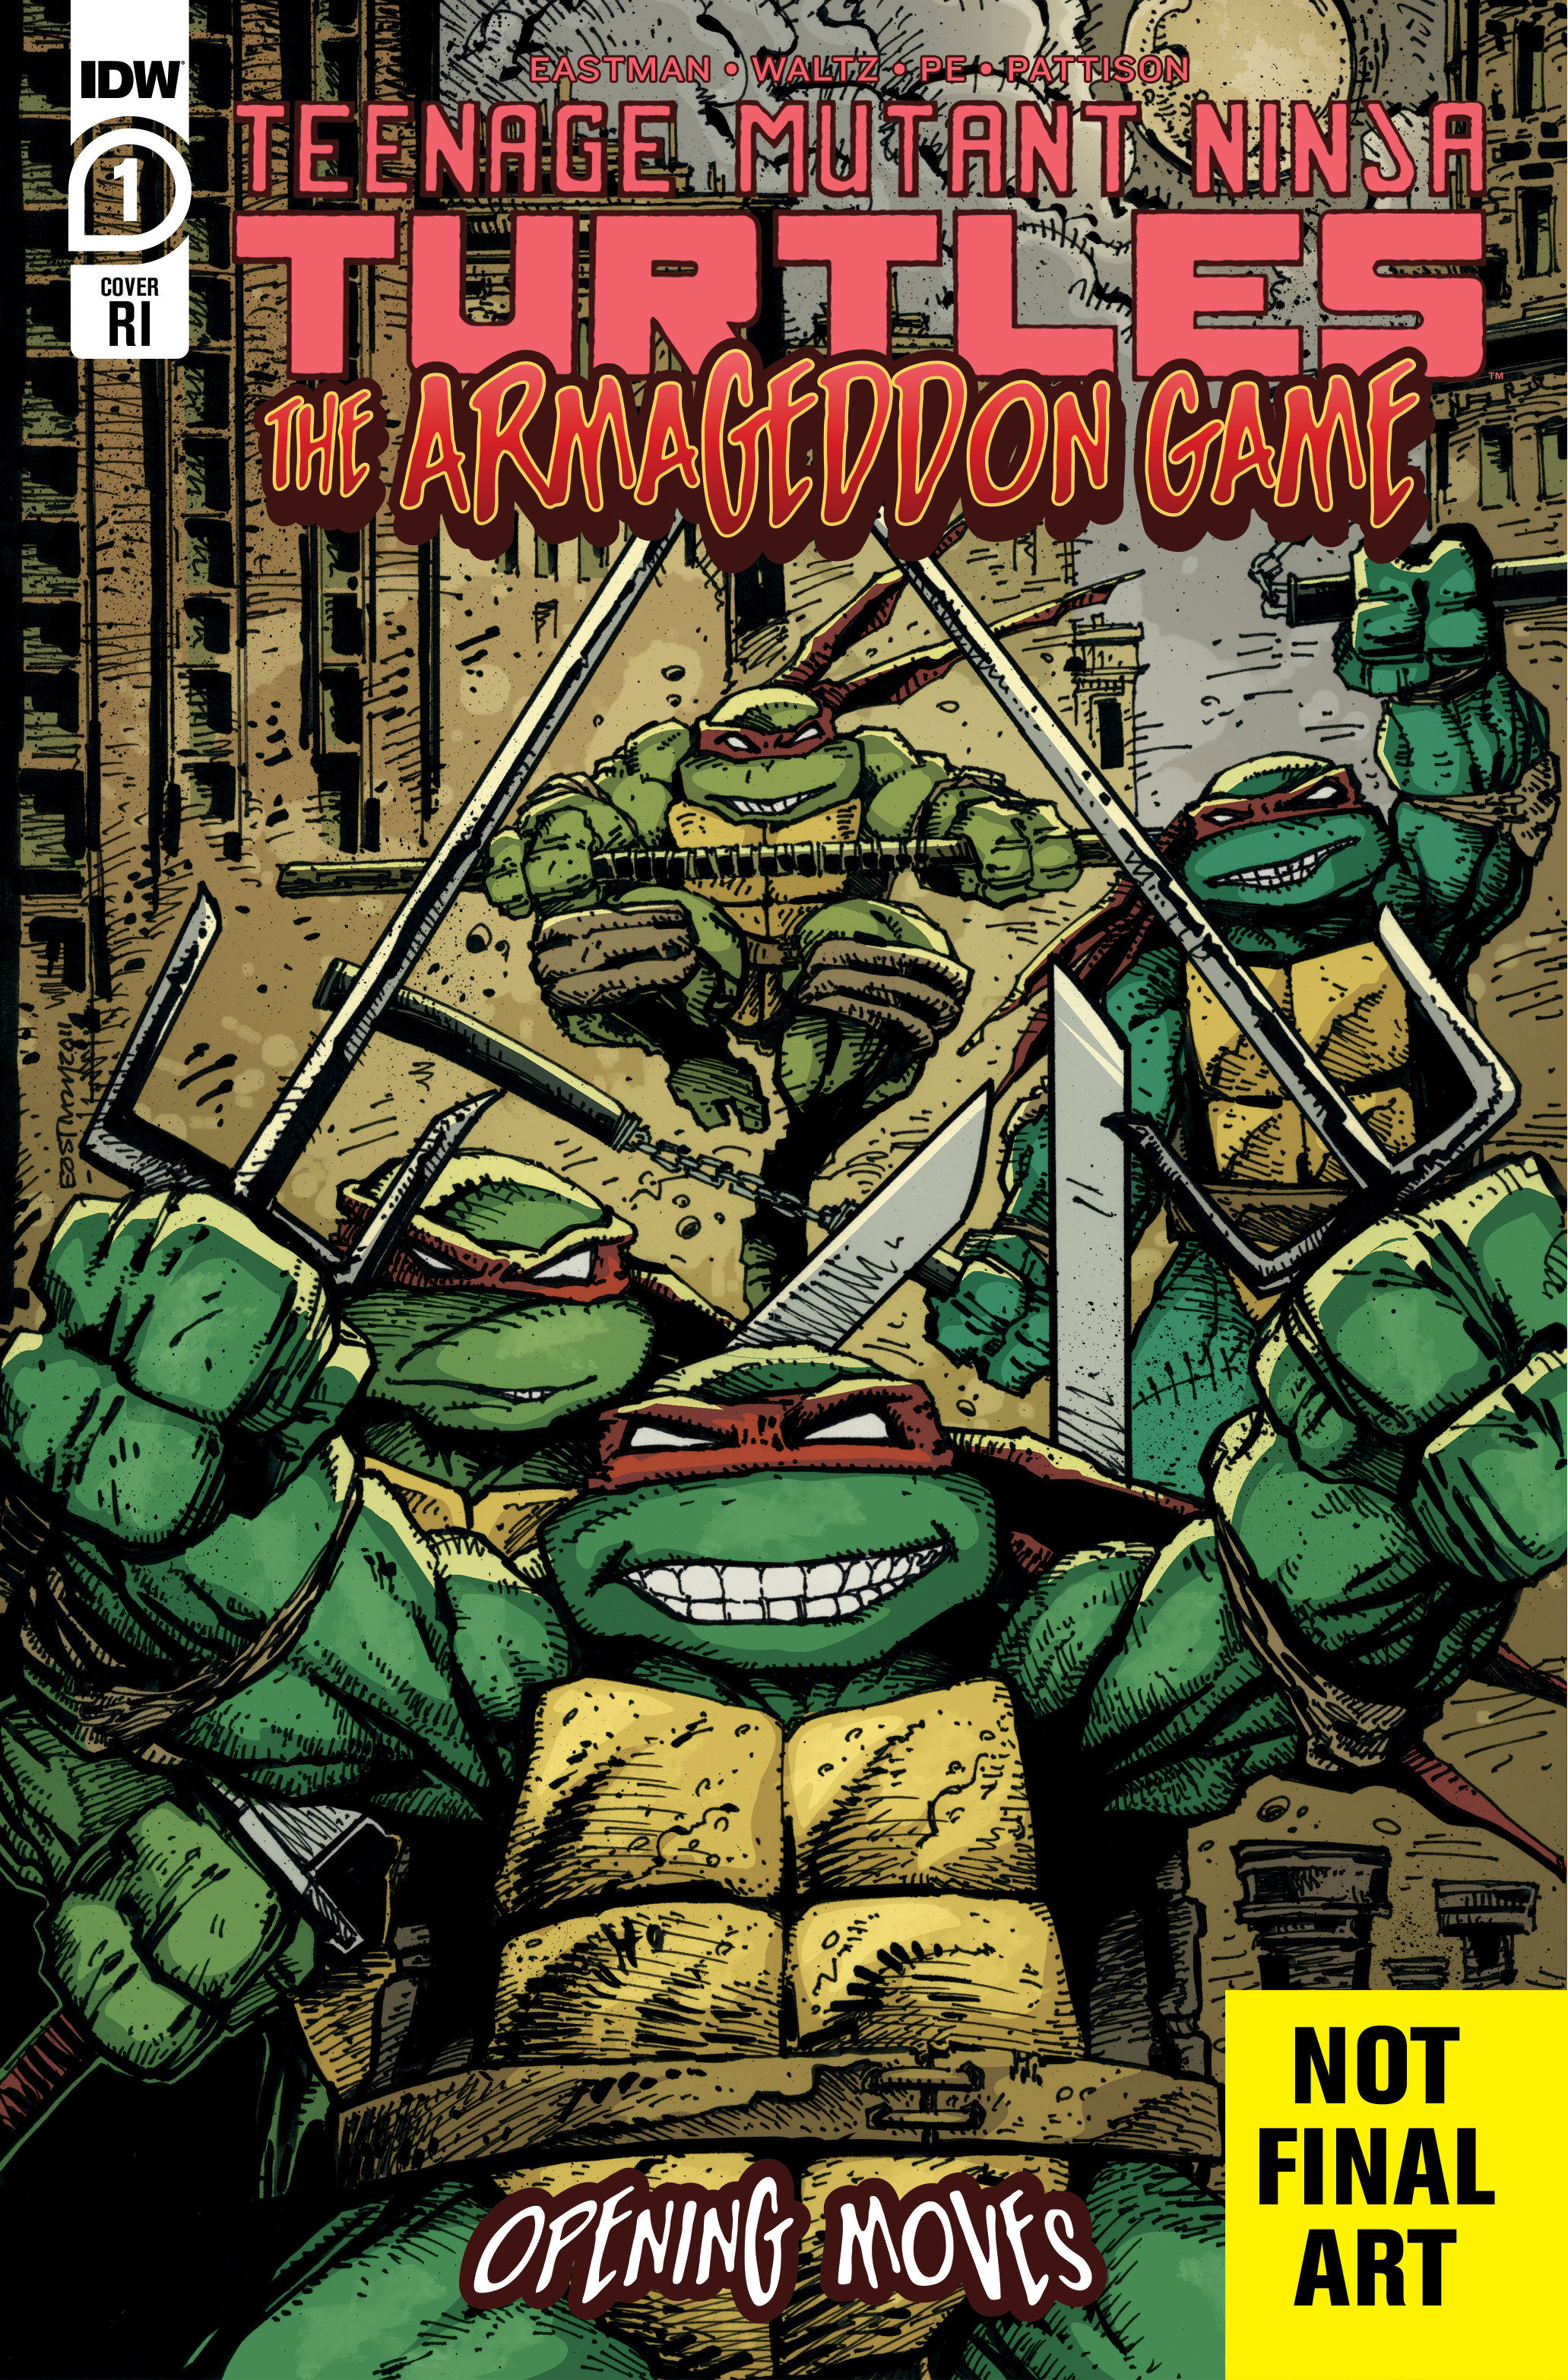 Teenage Mutant Ninja Turtles Armageddon Game Opening Moves #1 Cover B 1 for 10 Incentive Eastman